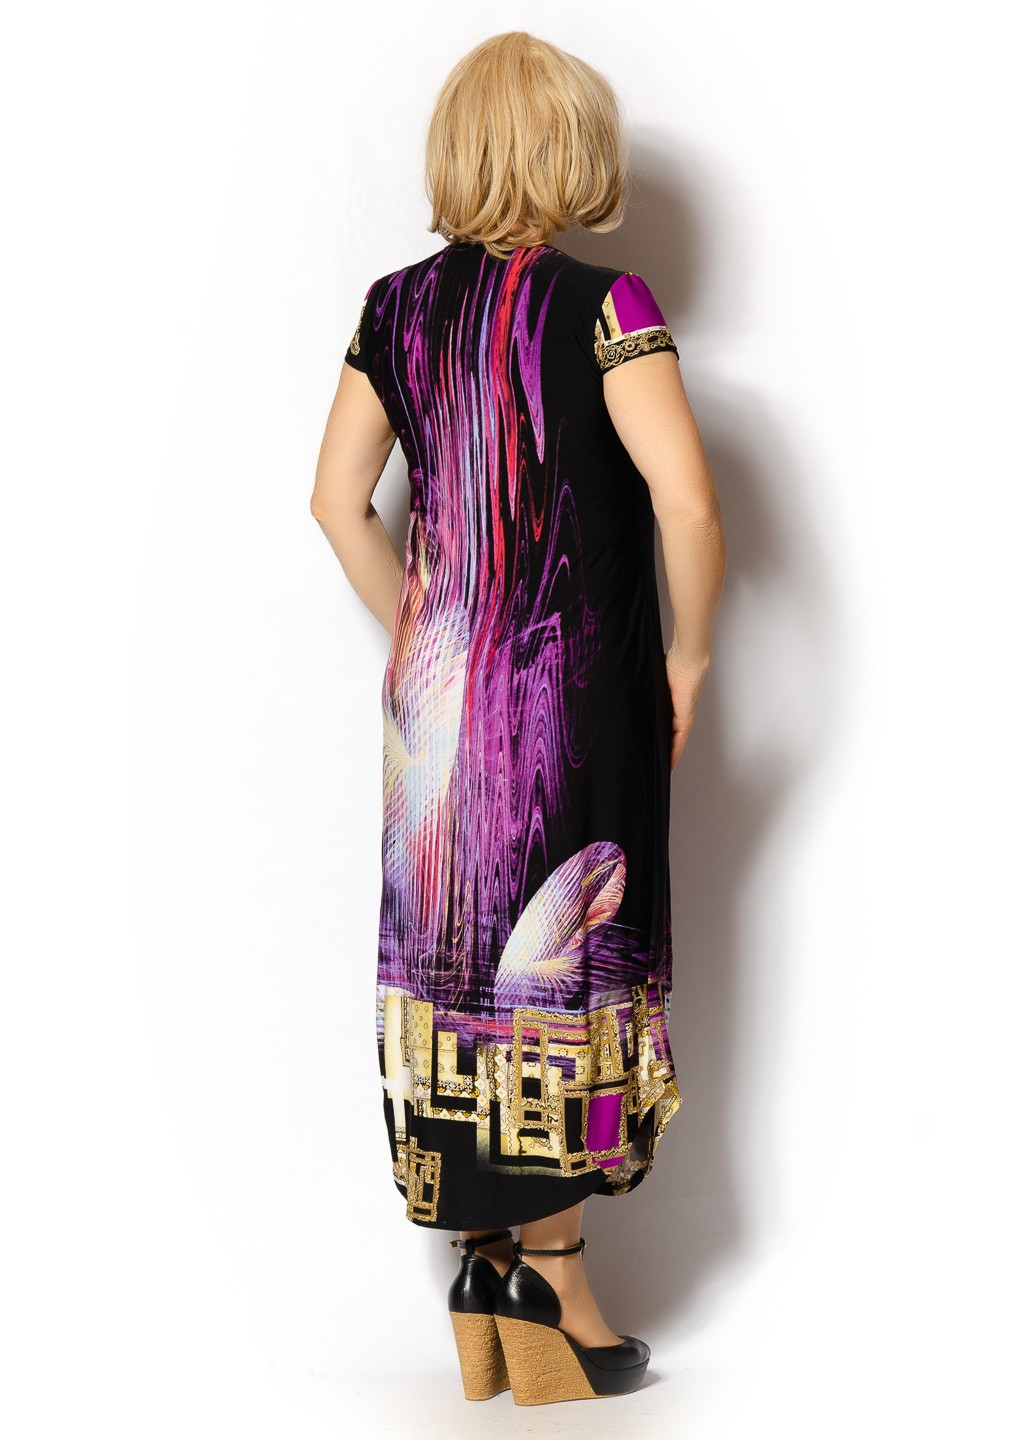 Фіолетова кежуал плаття, сукня LibeAmore з абстрактним візерунком